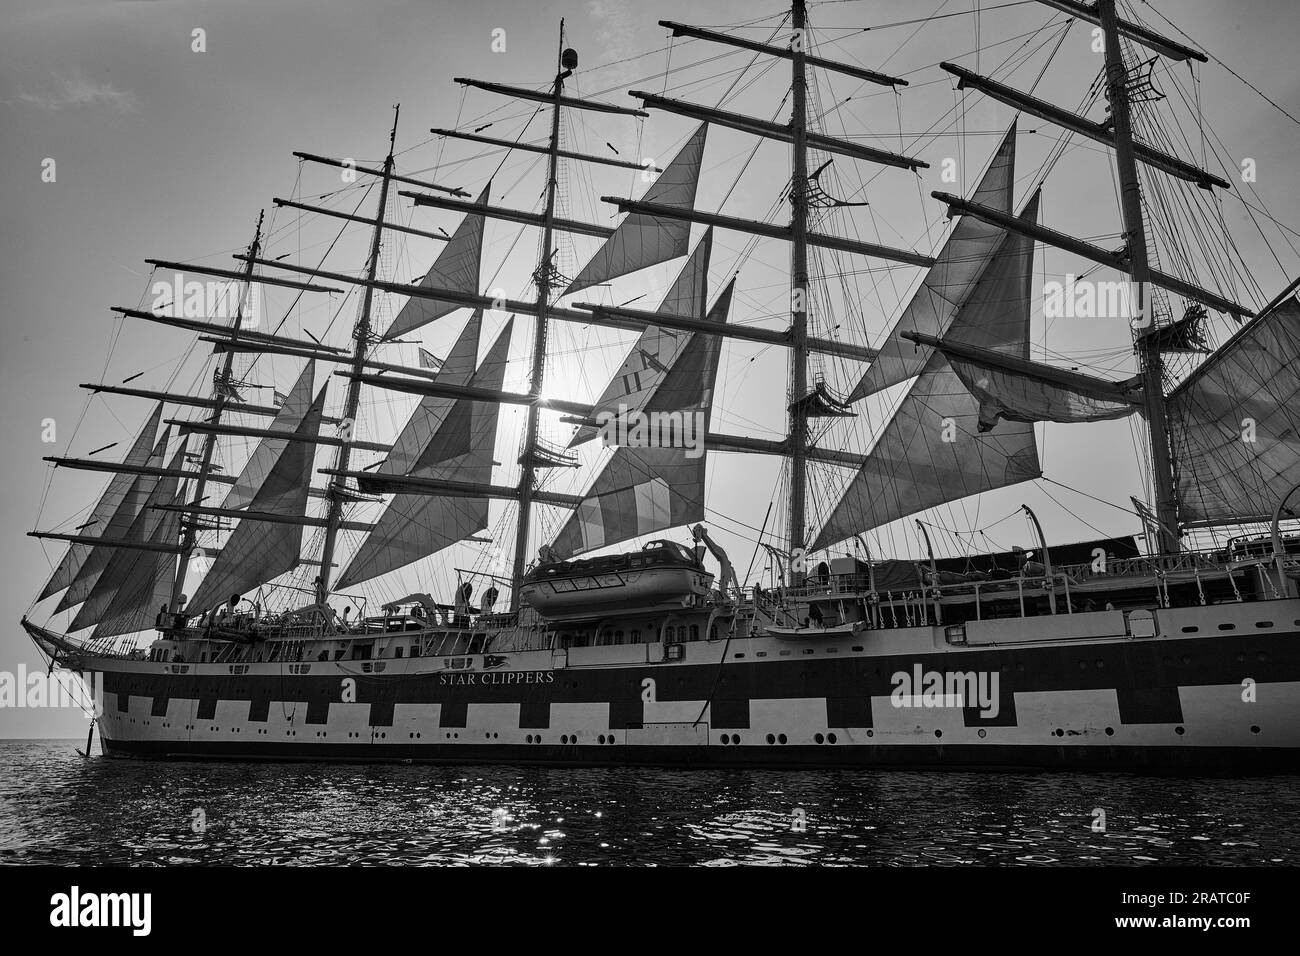 The Royal Clipper Tall-Ship under sail Stock Photo